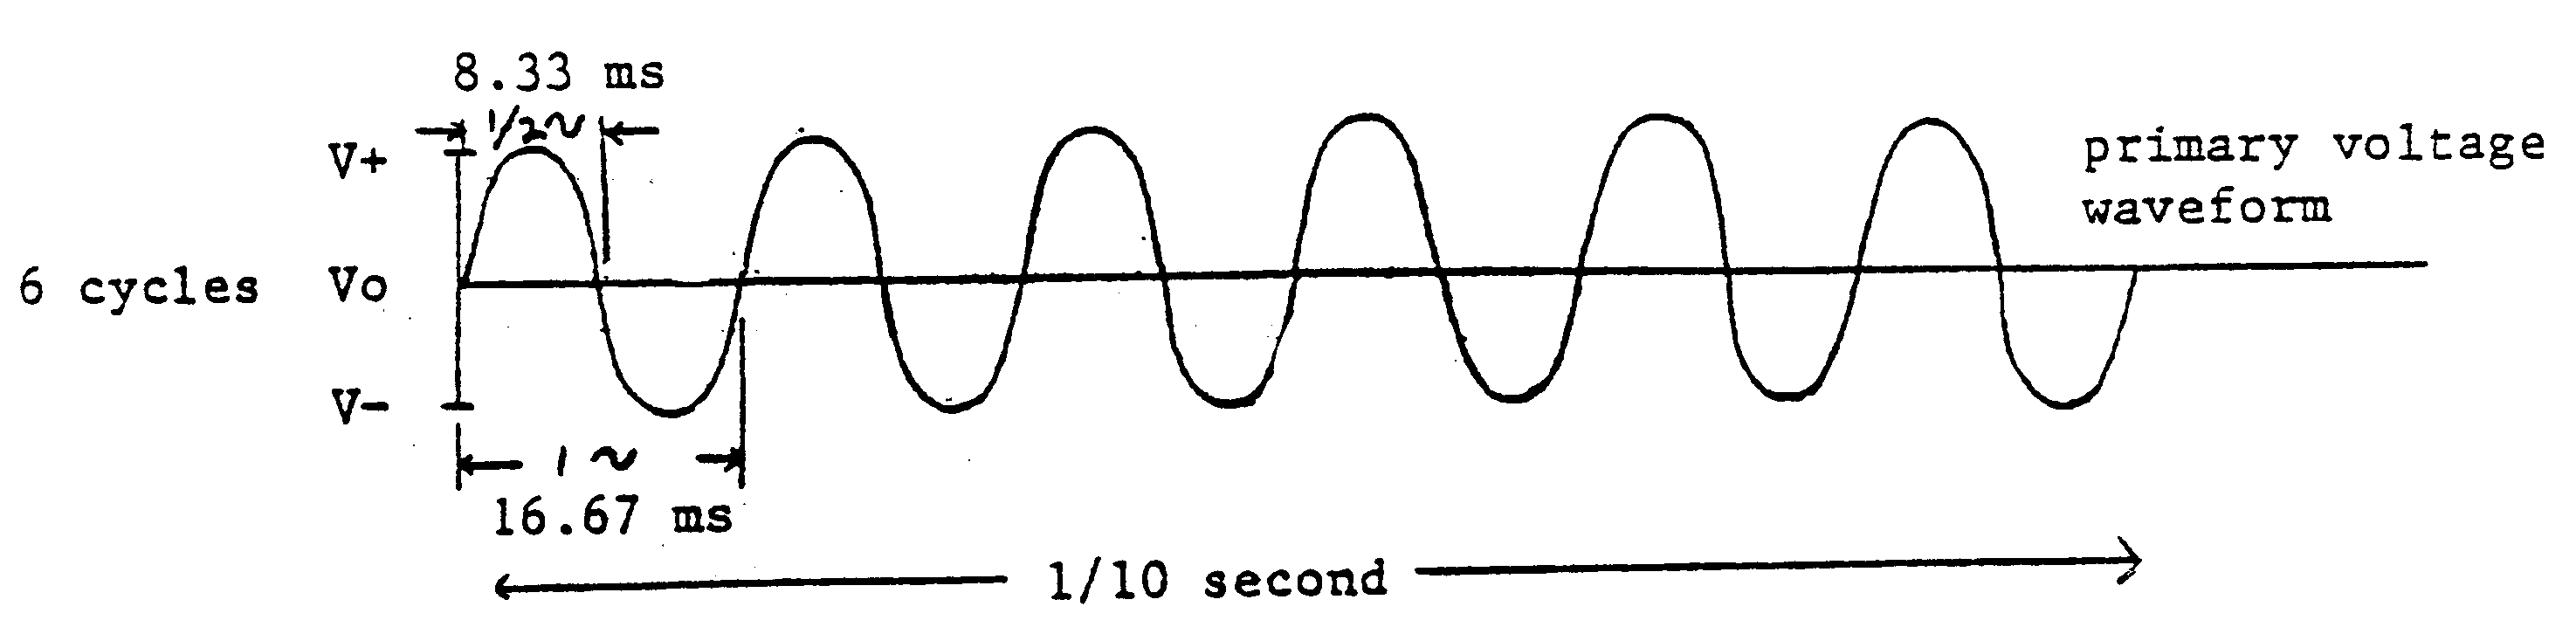 Primary voltage waveform